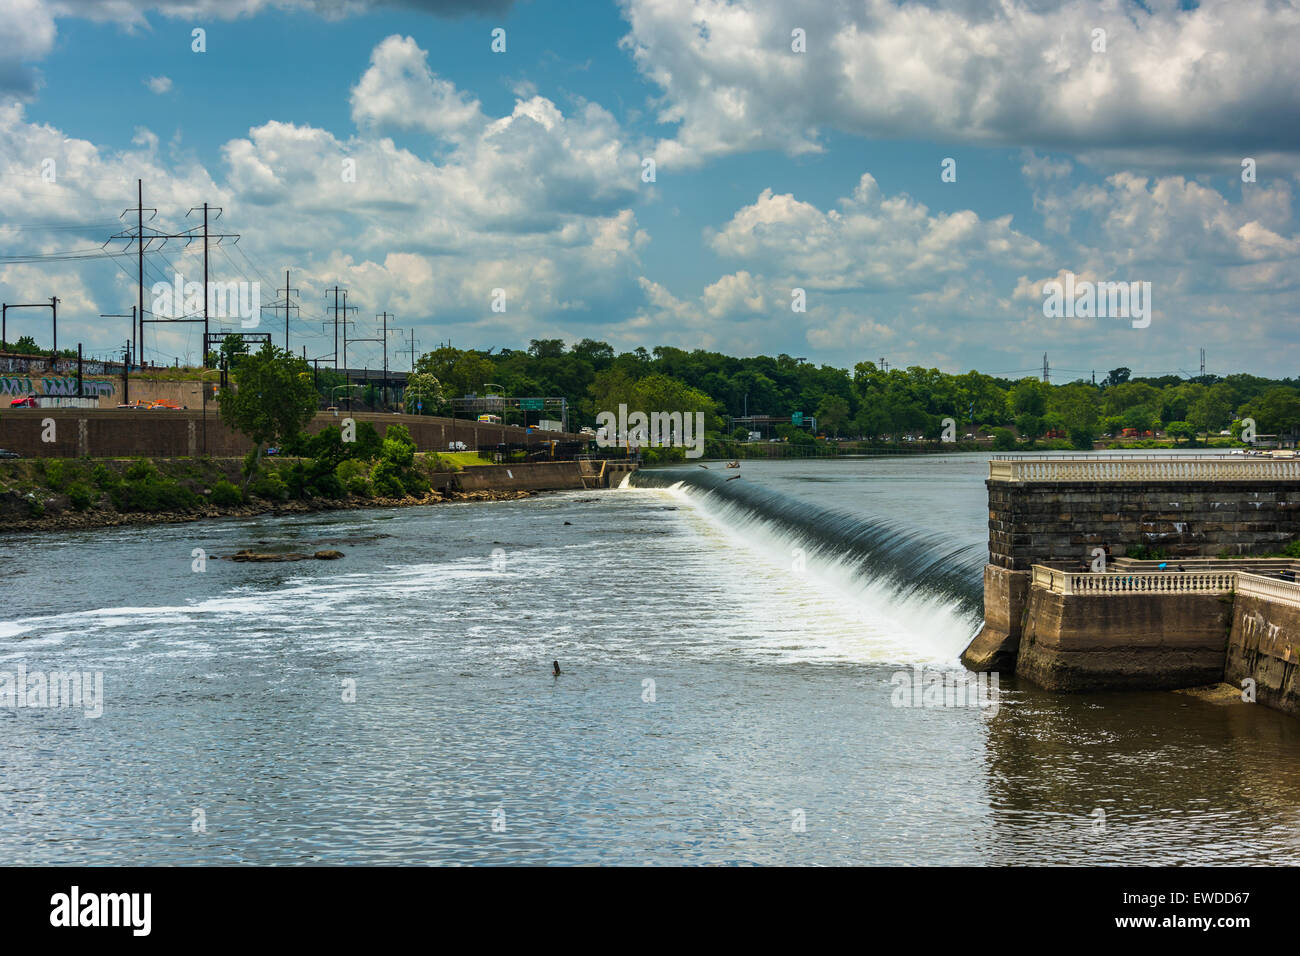 Dam on the Schuylkill River, seen from Fairmount Park in Philadelphia, Pennsylvania. Stock Photo